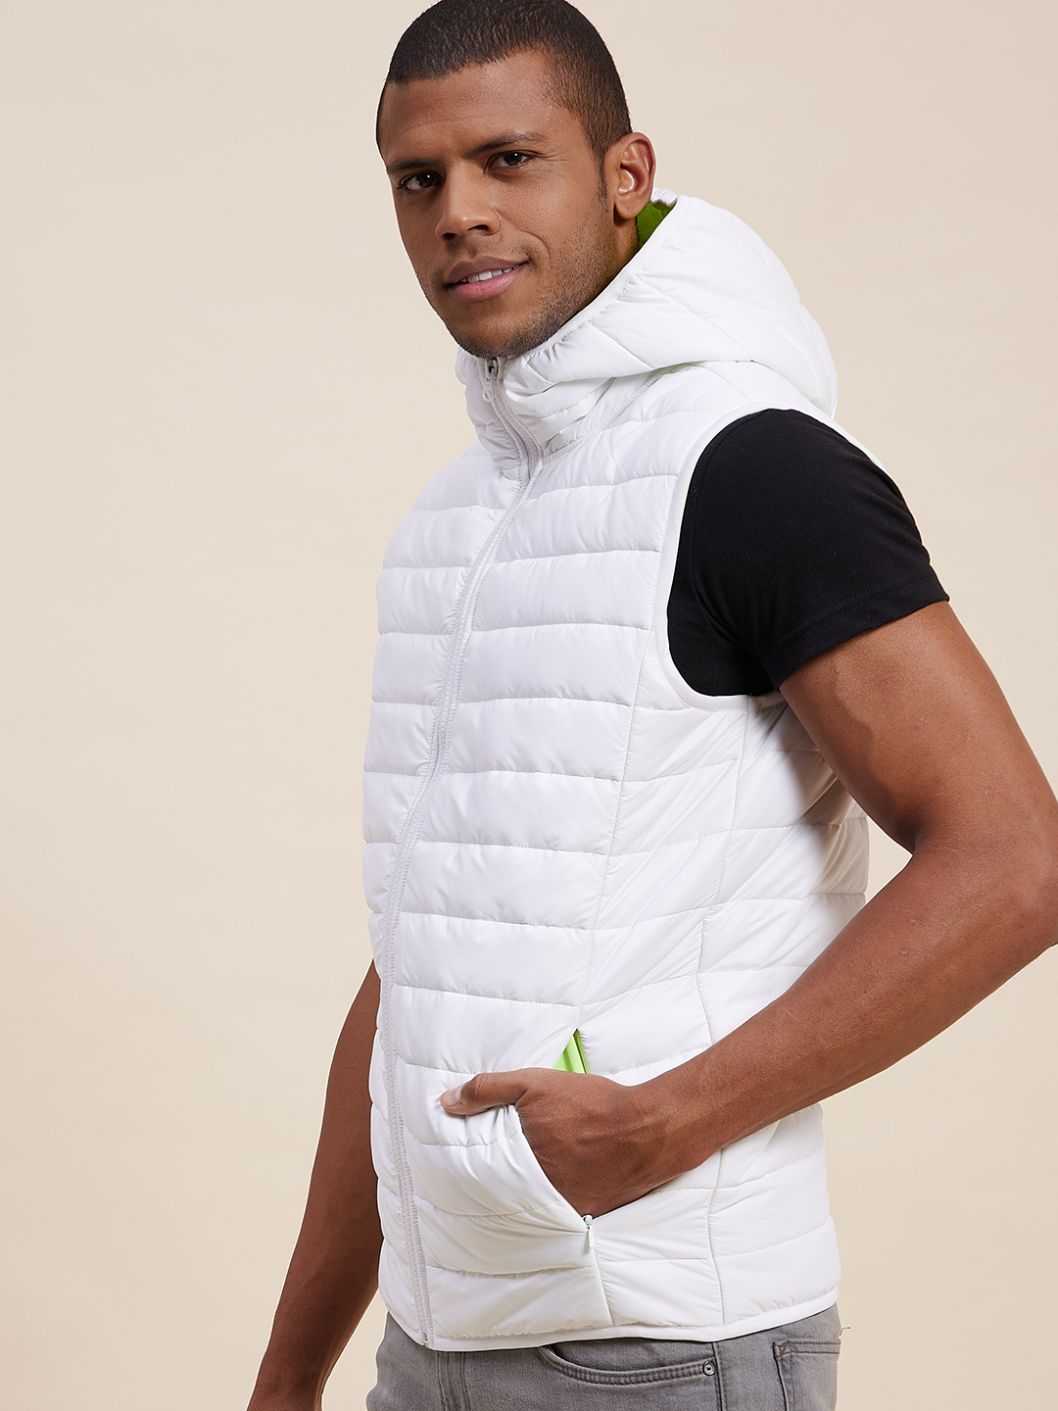 Buy Men's White Sleeveless Puffer Hoodie Jacket Online at Sassafras